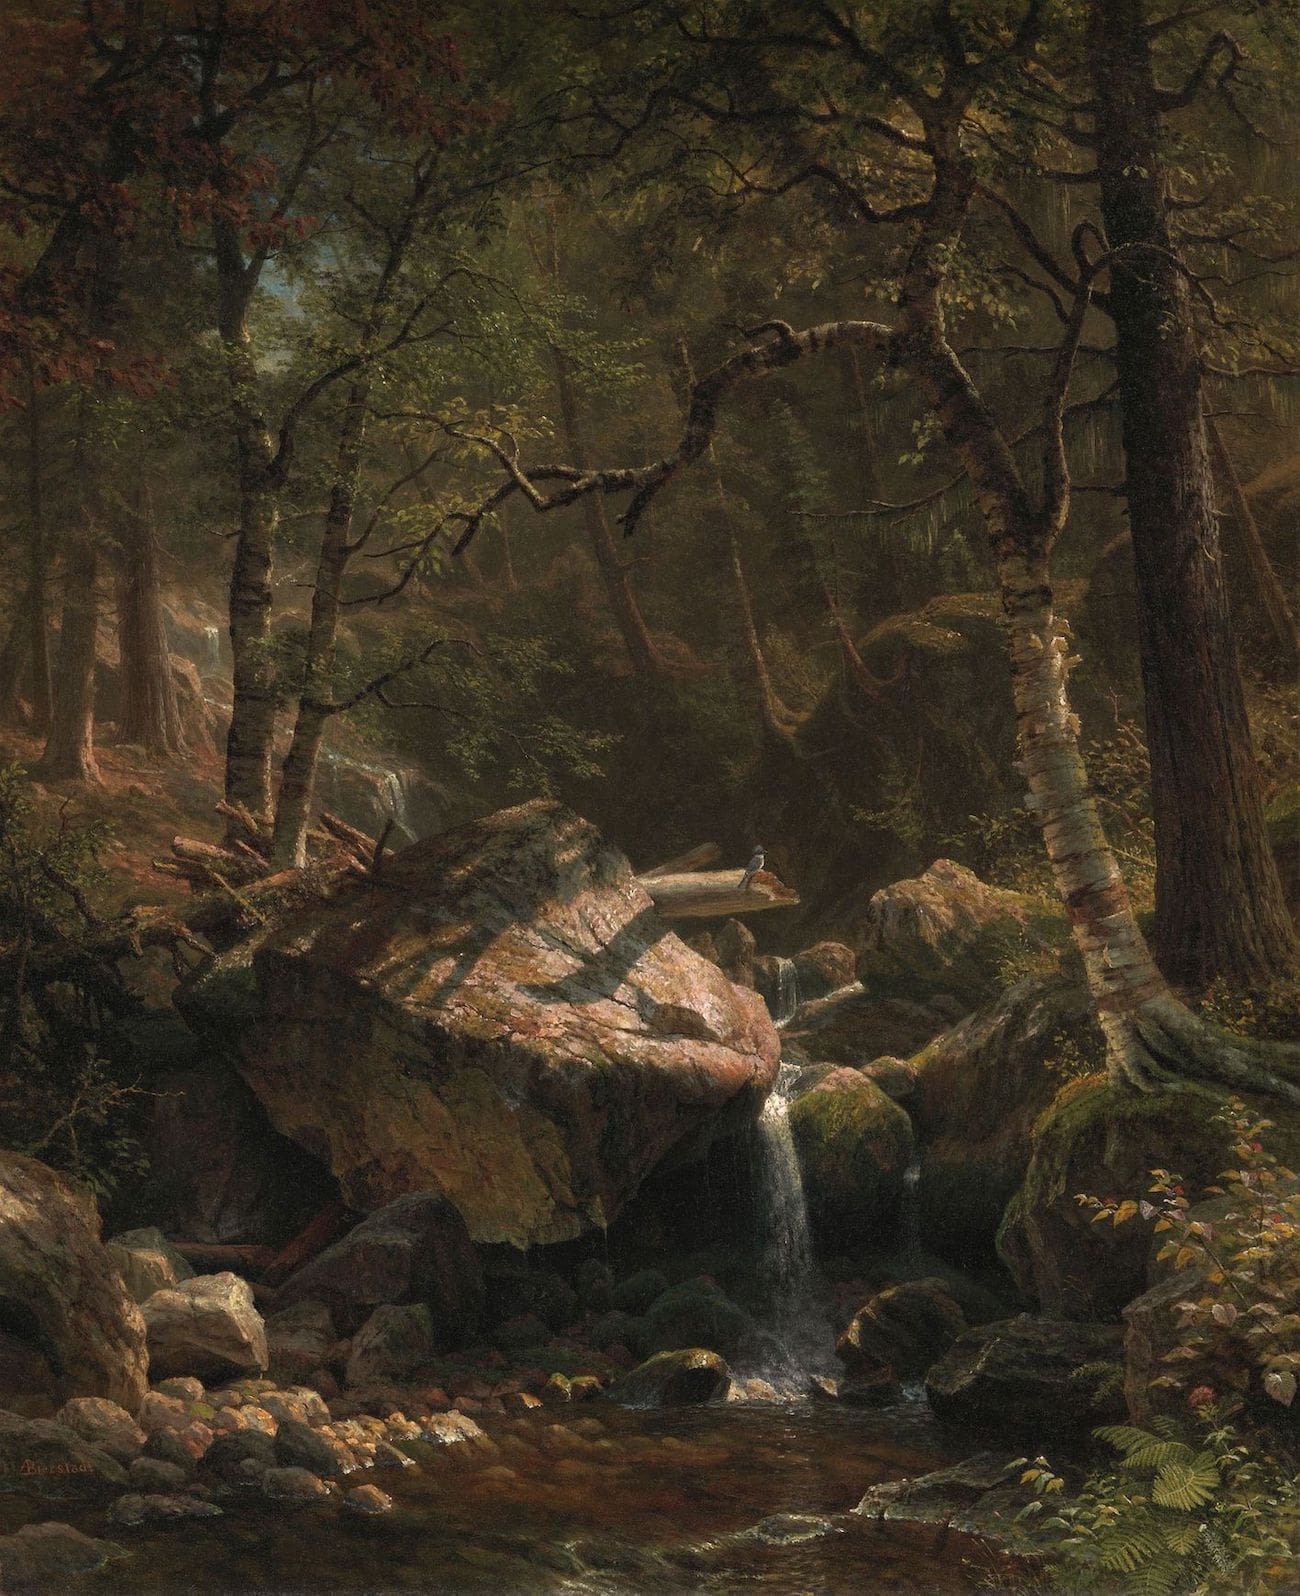 Albert Bierstadt, Mountain Brook, 1863. The Art Institute of Chicago (article on present-moment awareness)